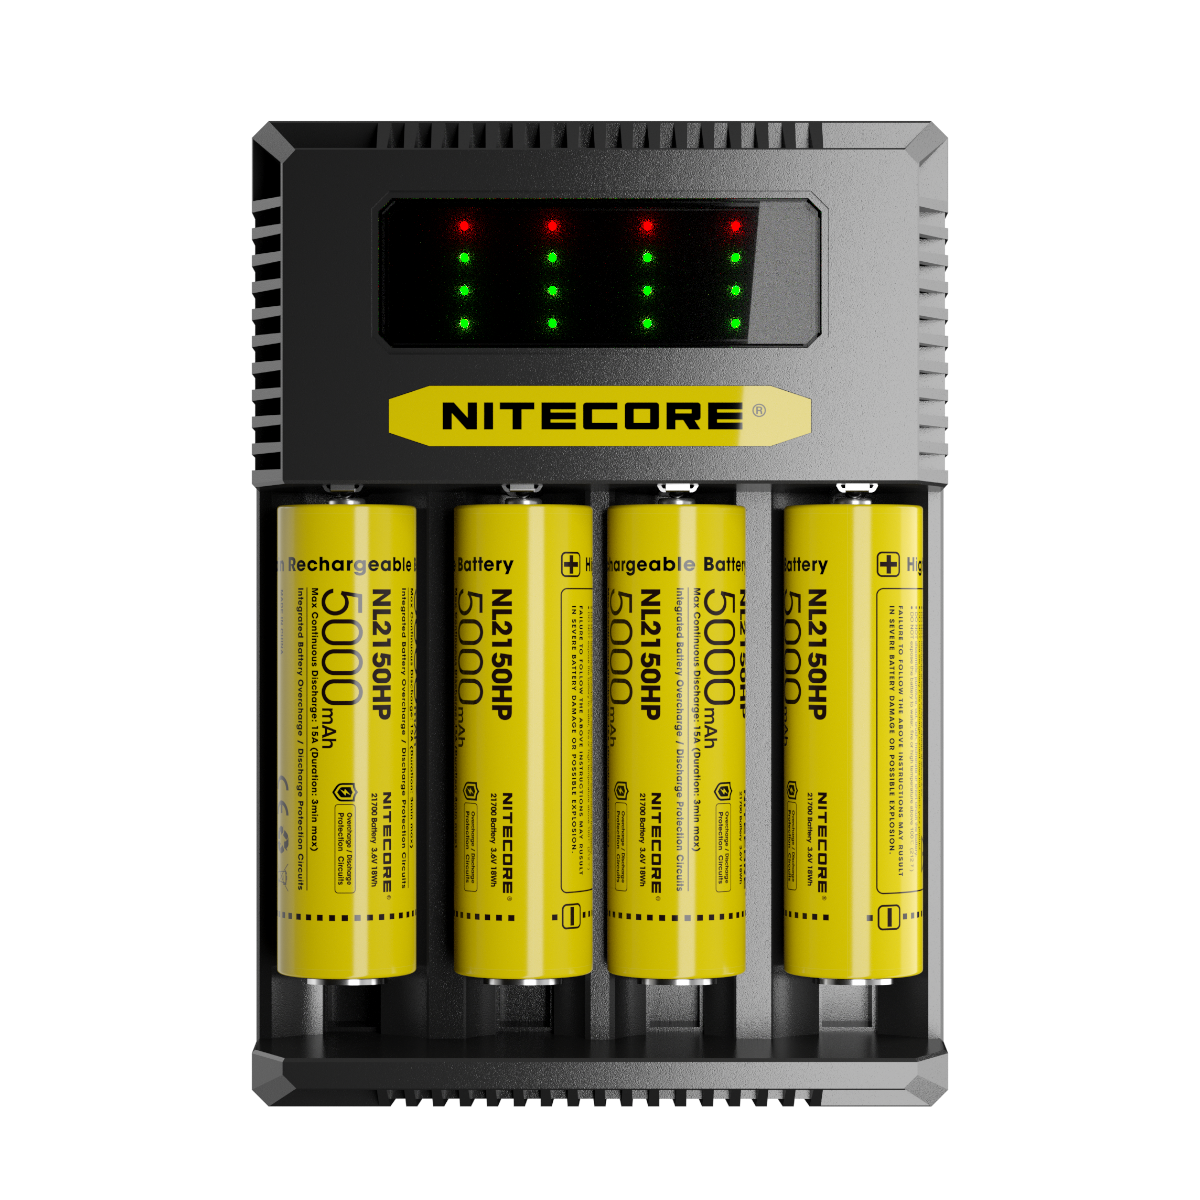 NITECORE Ci4 Universal Battery Charger 3000mA USB-C Quick Charger For IMR/Li-ion Ni-MH/Ni-Cd Battery Flashlight RC Toys Home Tools